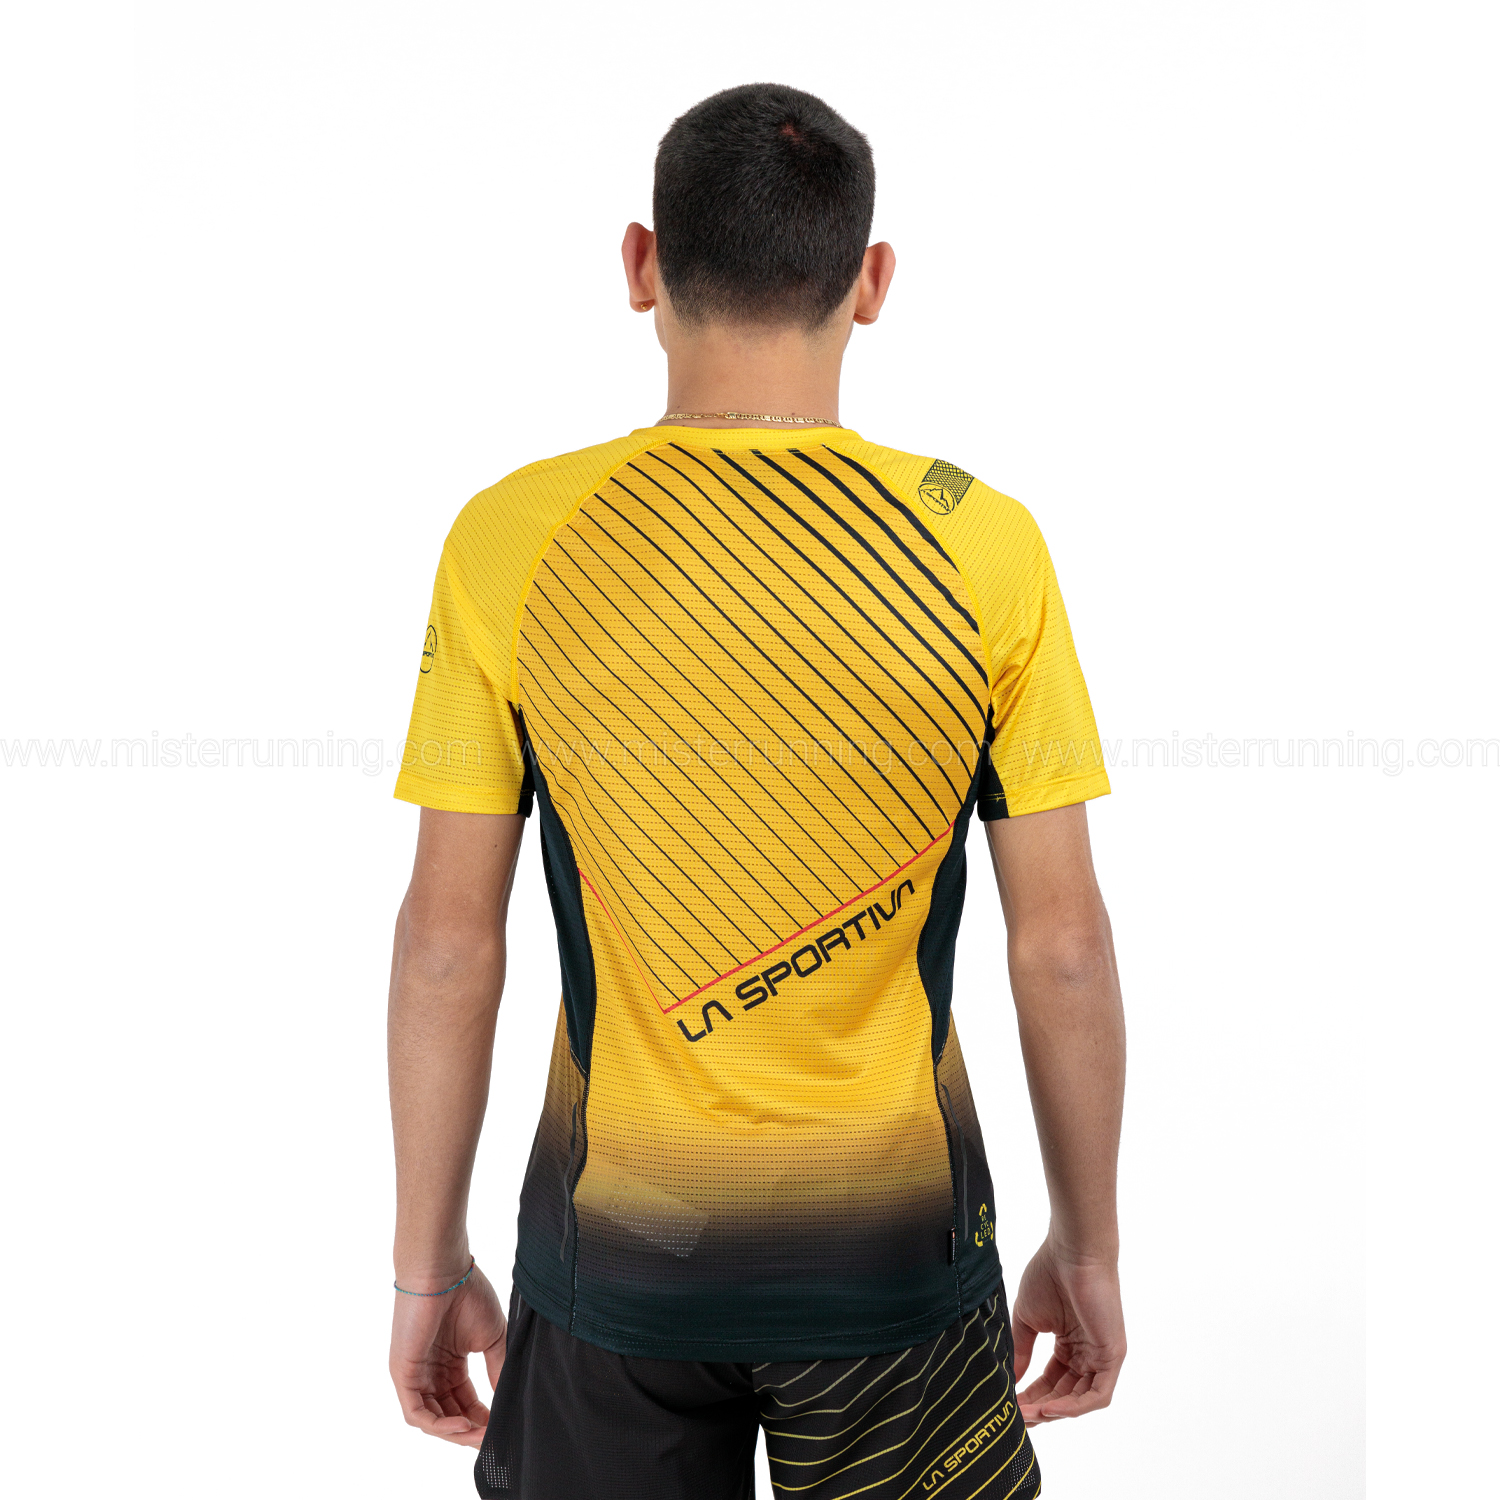 La Sportiva Wave Camiseta - Yellow/Black